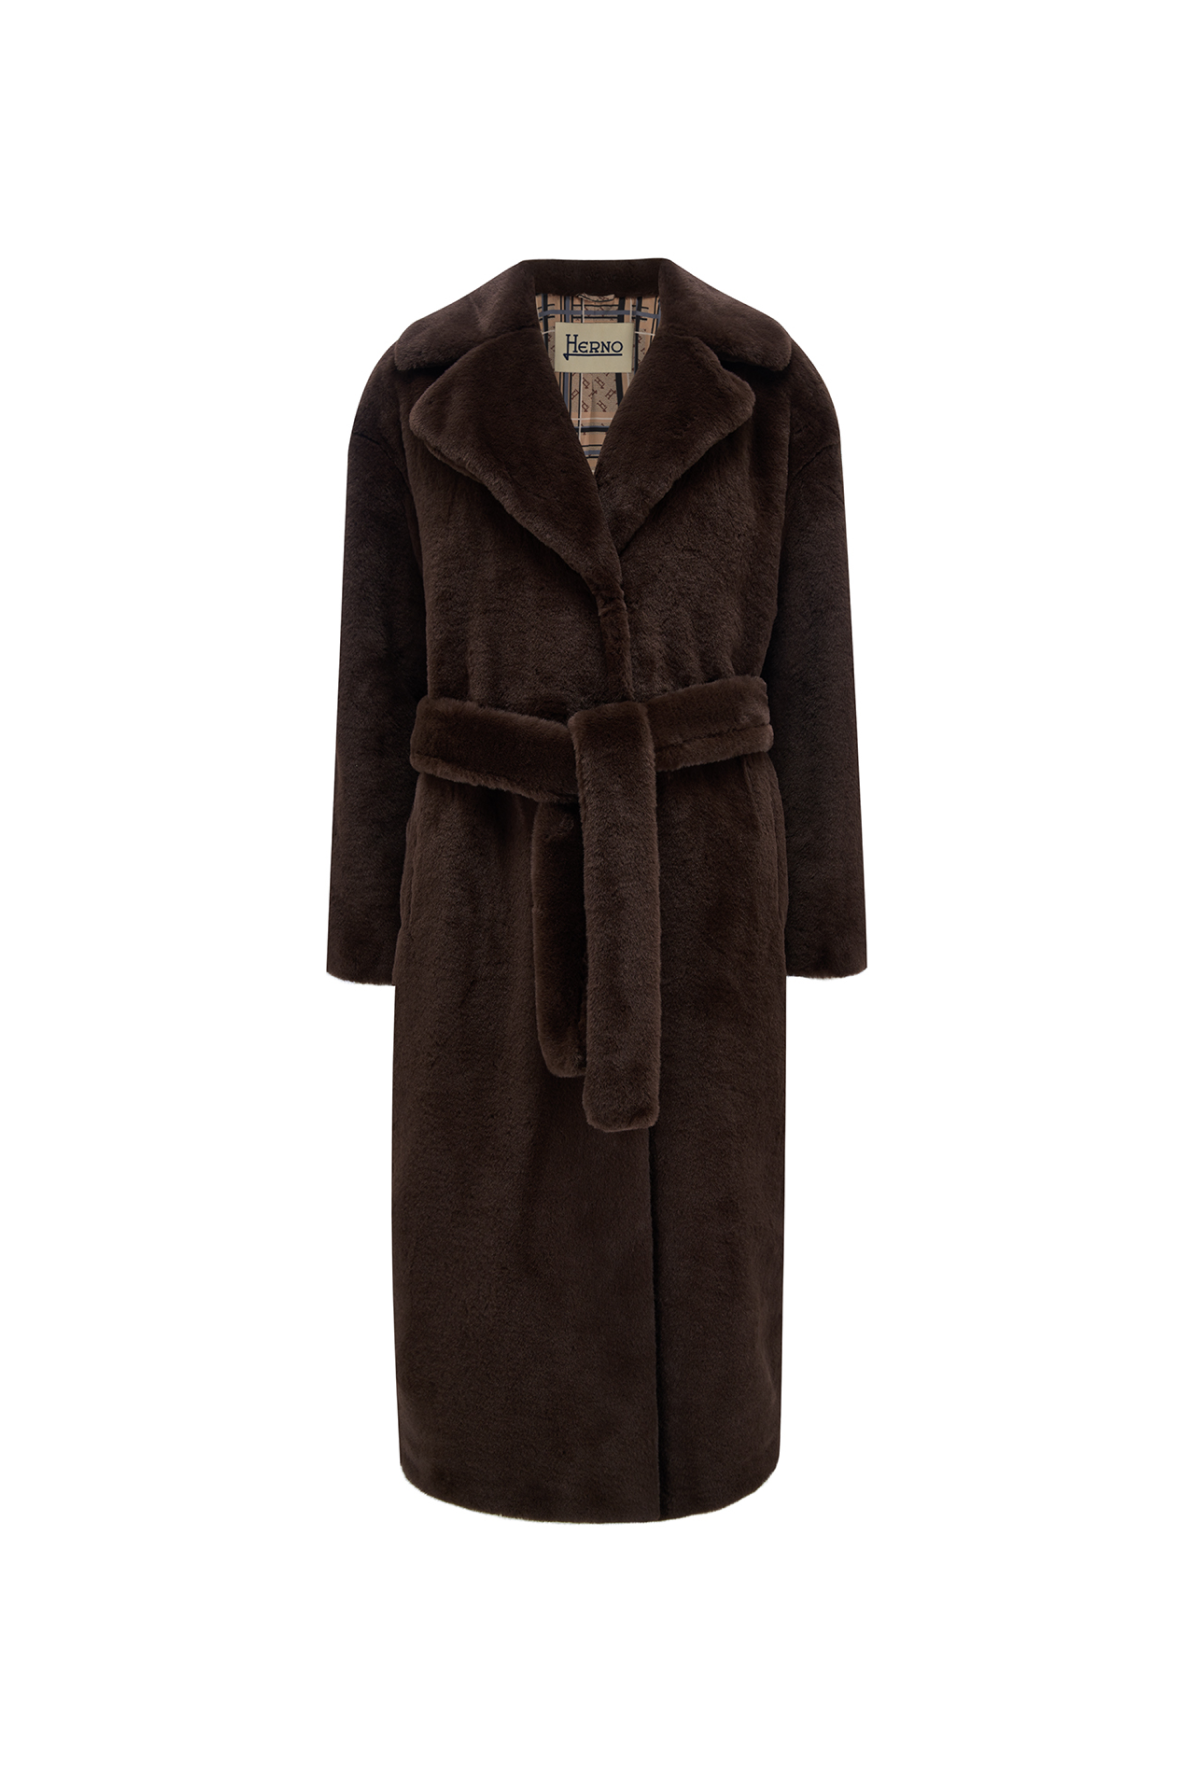 Herno Women’s Faux-fur Long Coat Brown - Front View